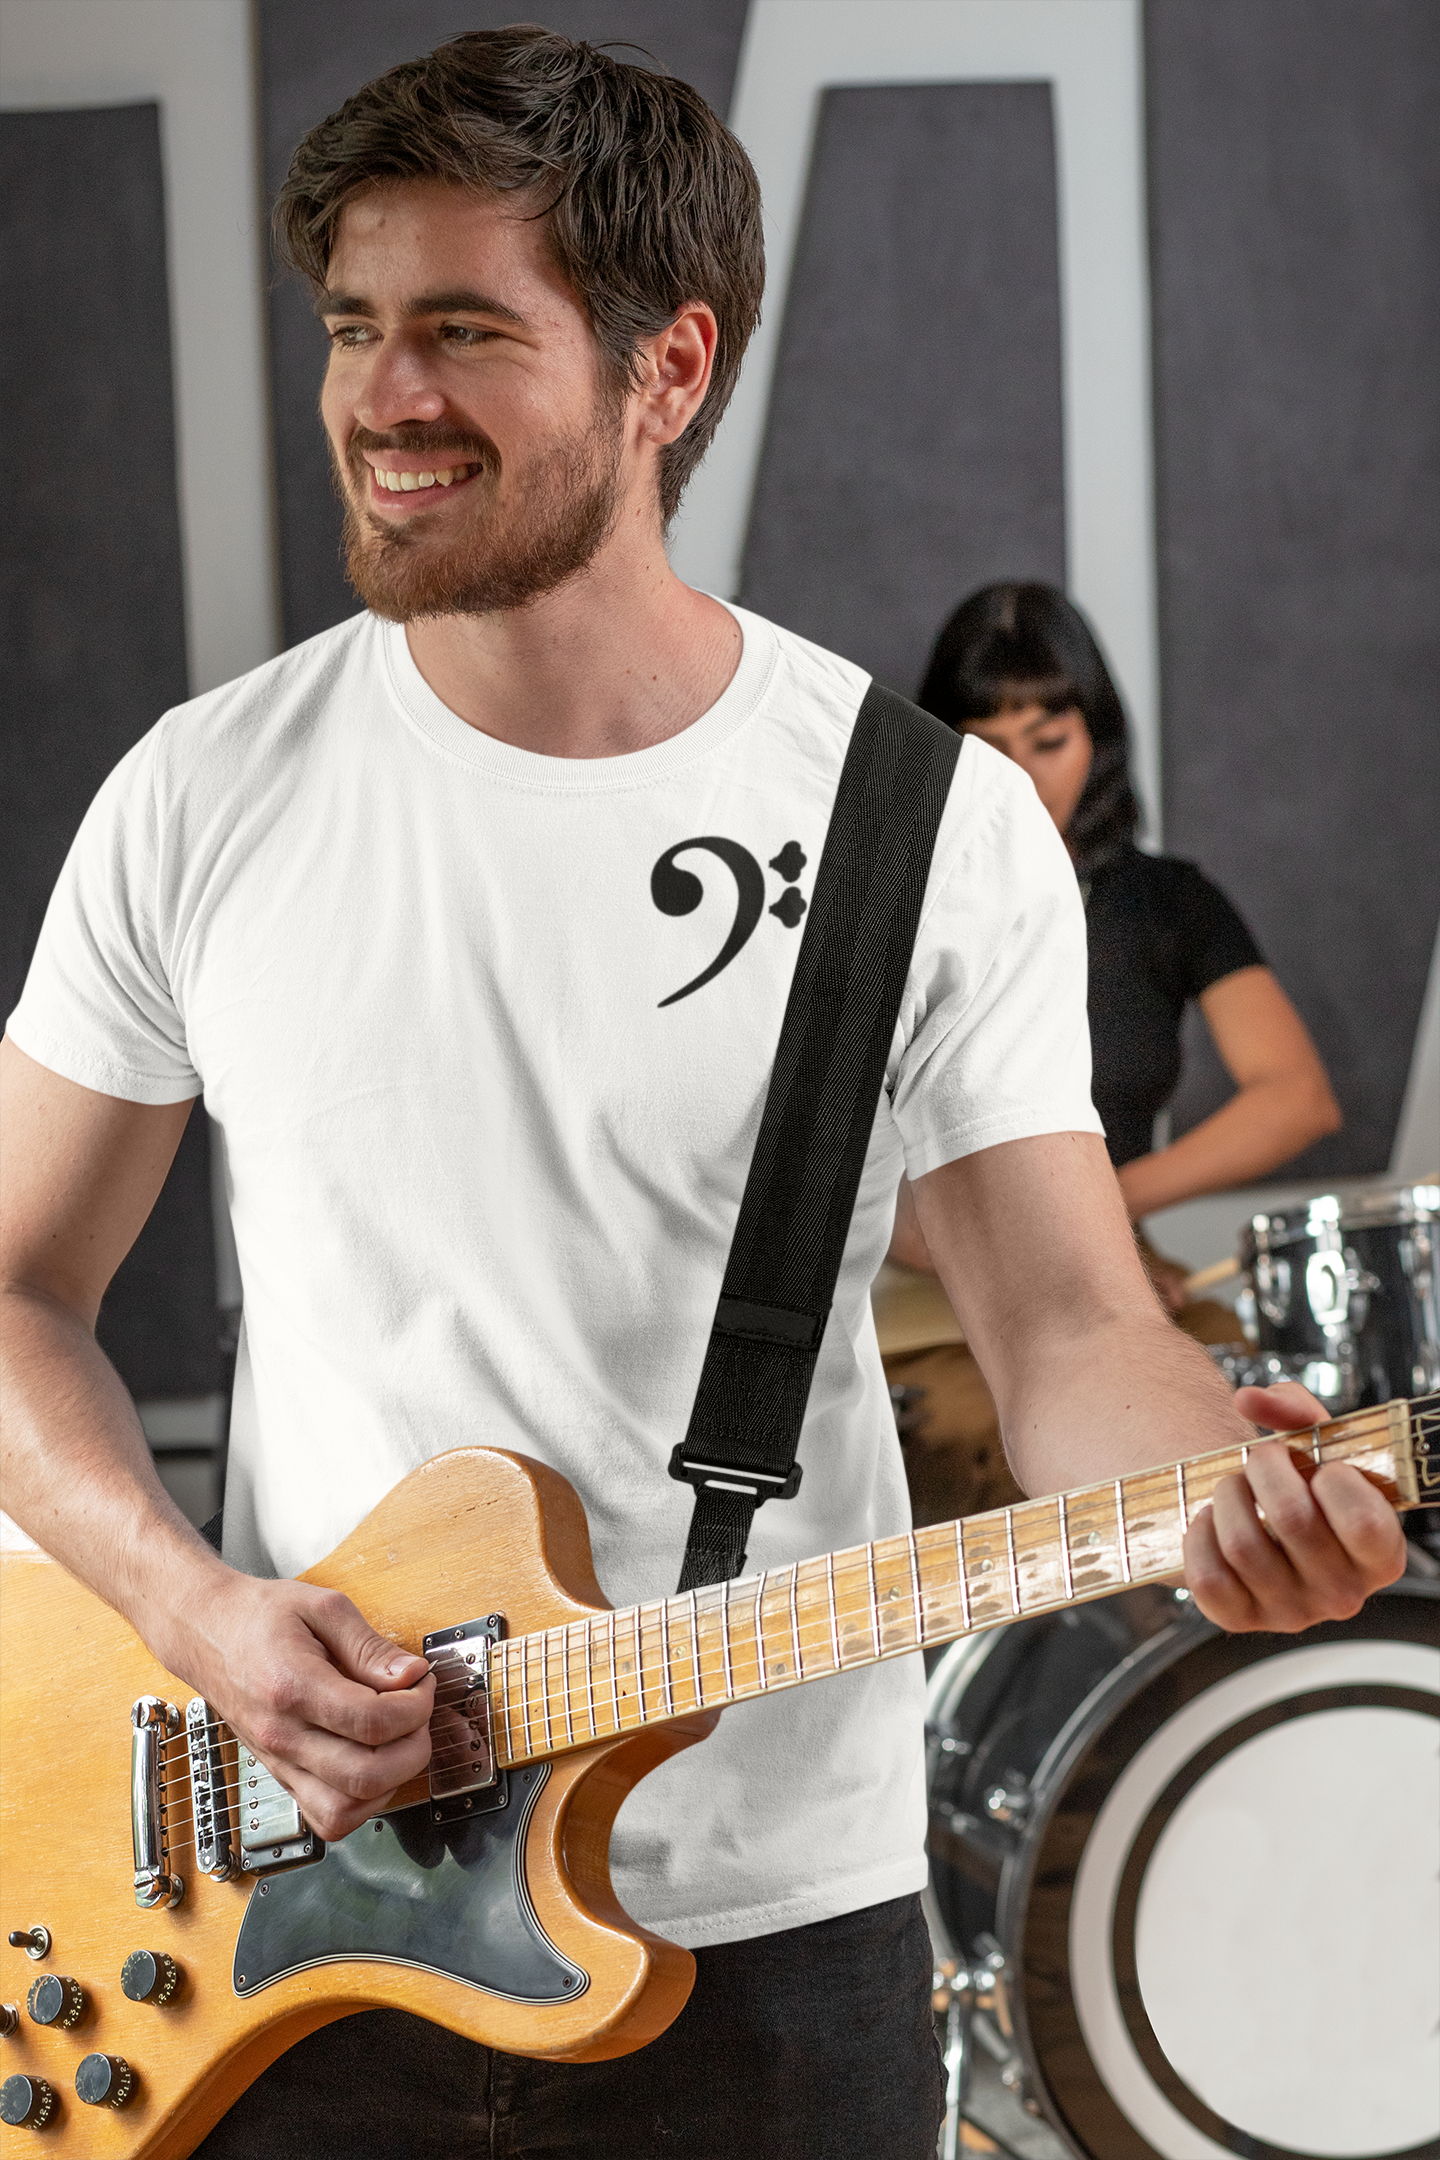 Bass essentials T-shirt in white (unisex) by Xavier Foley